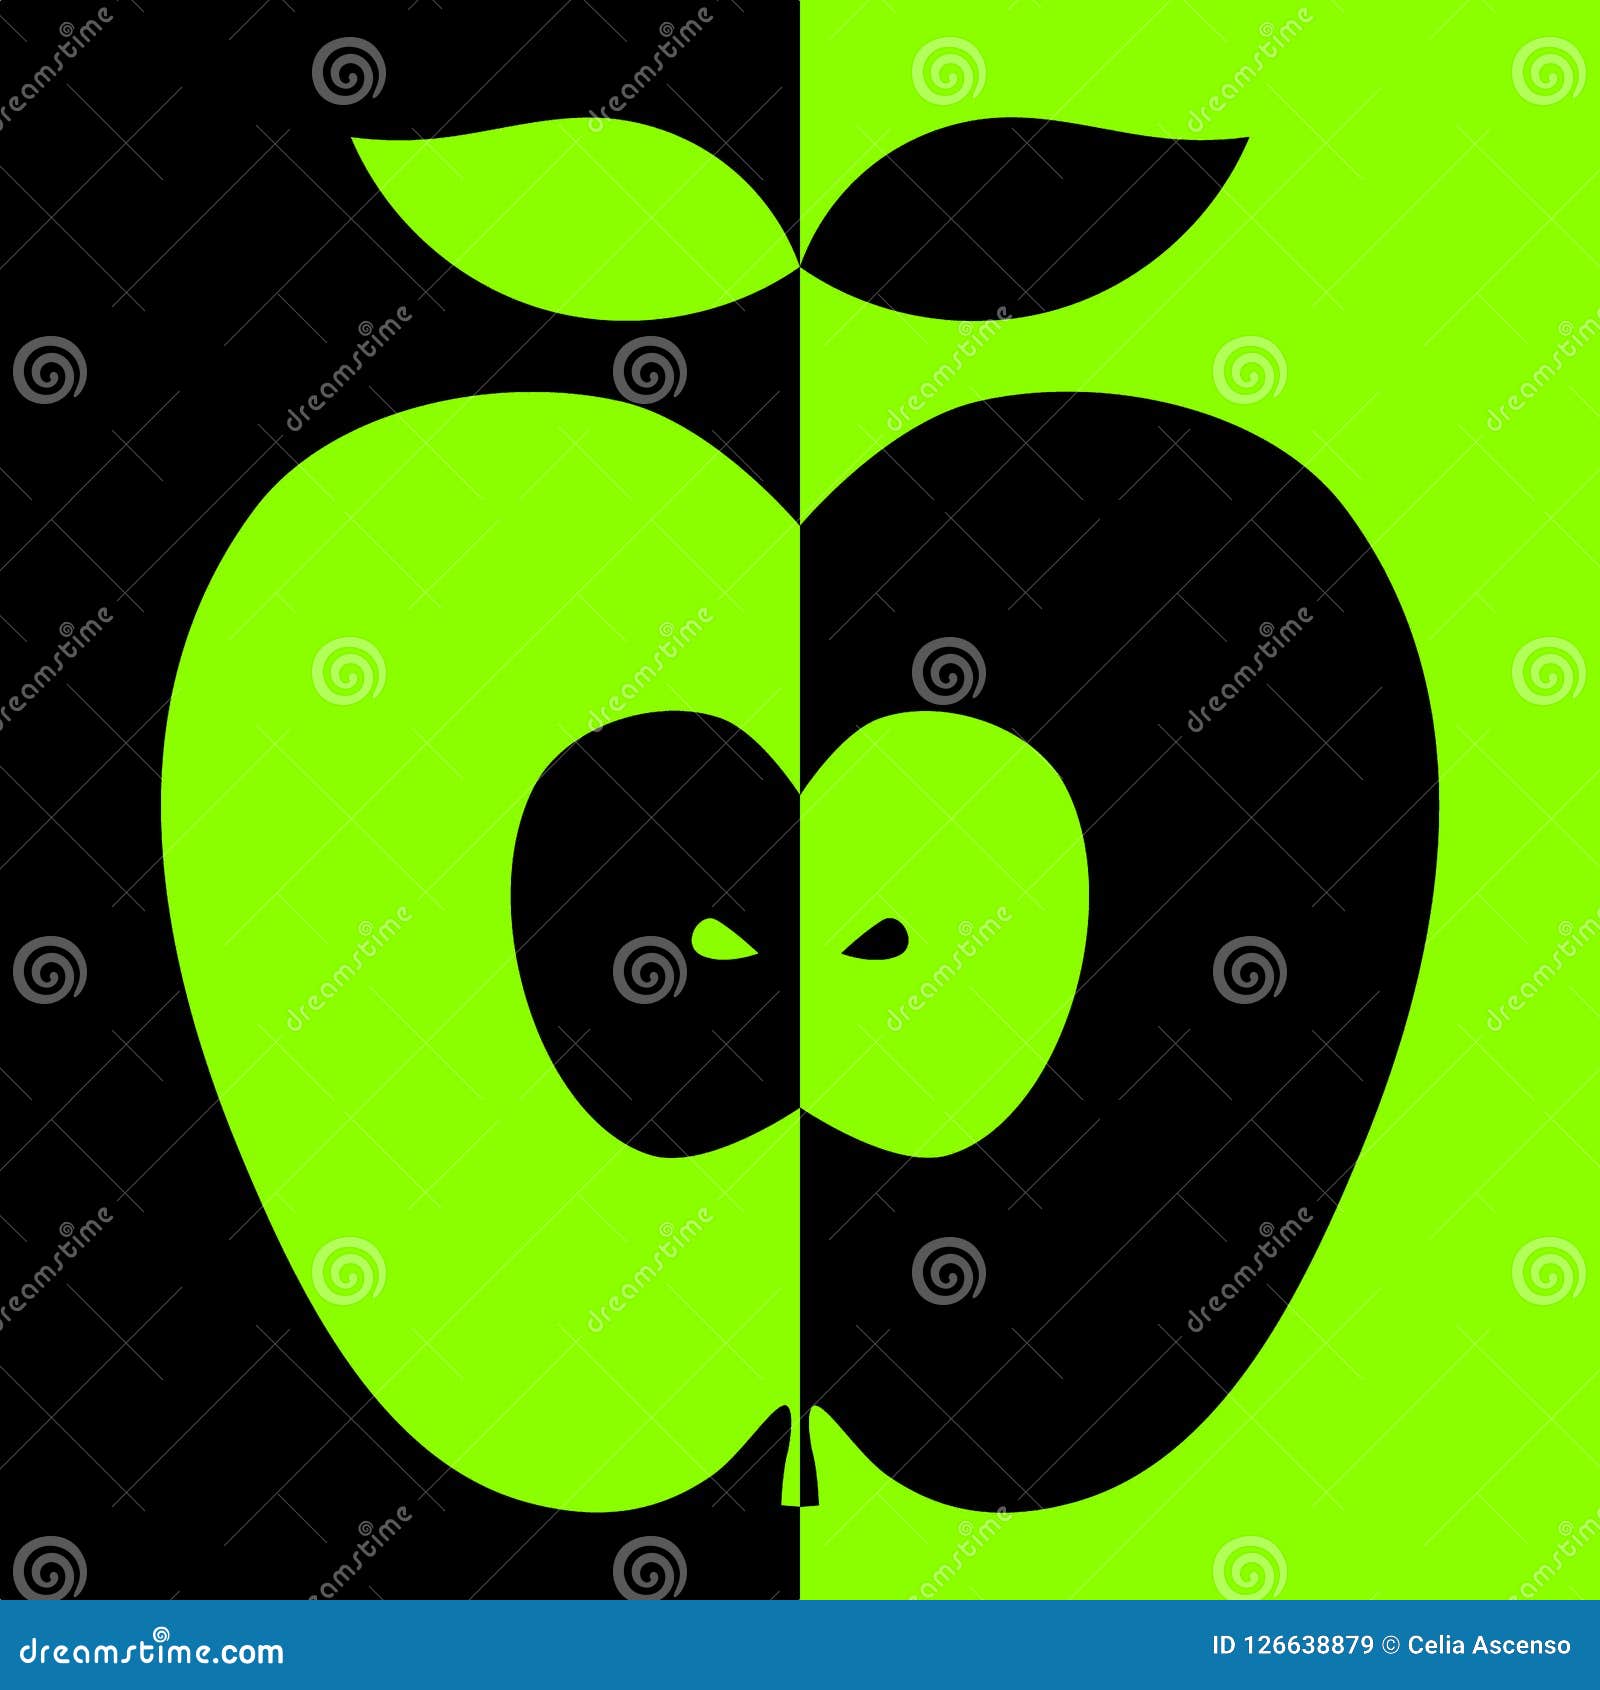 contrasting apple cut in half